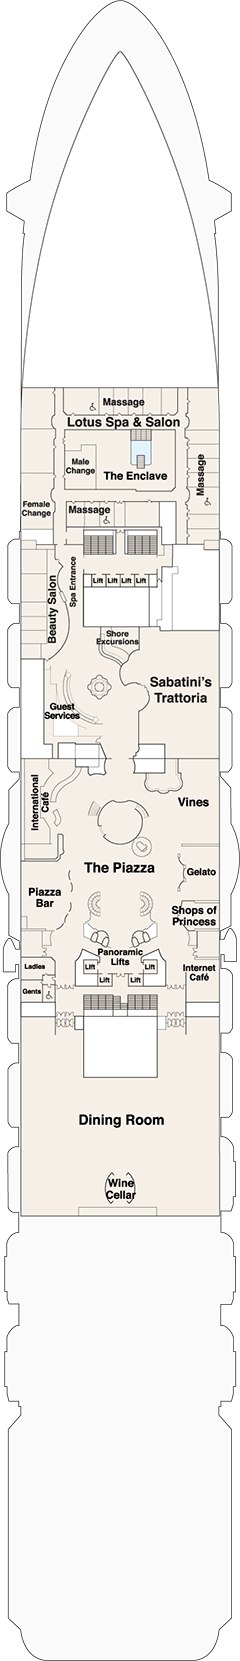 Plaza Deck (5)